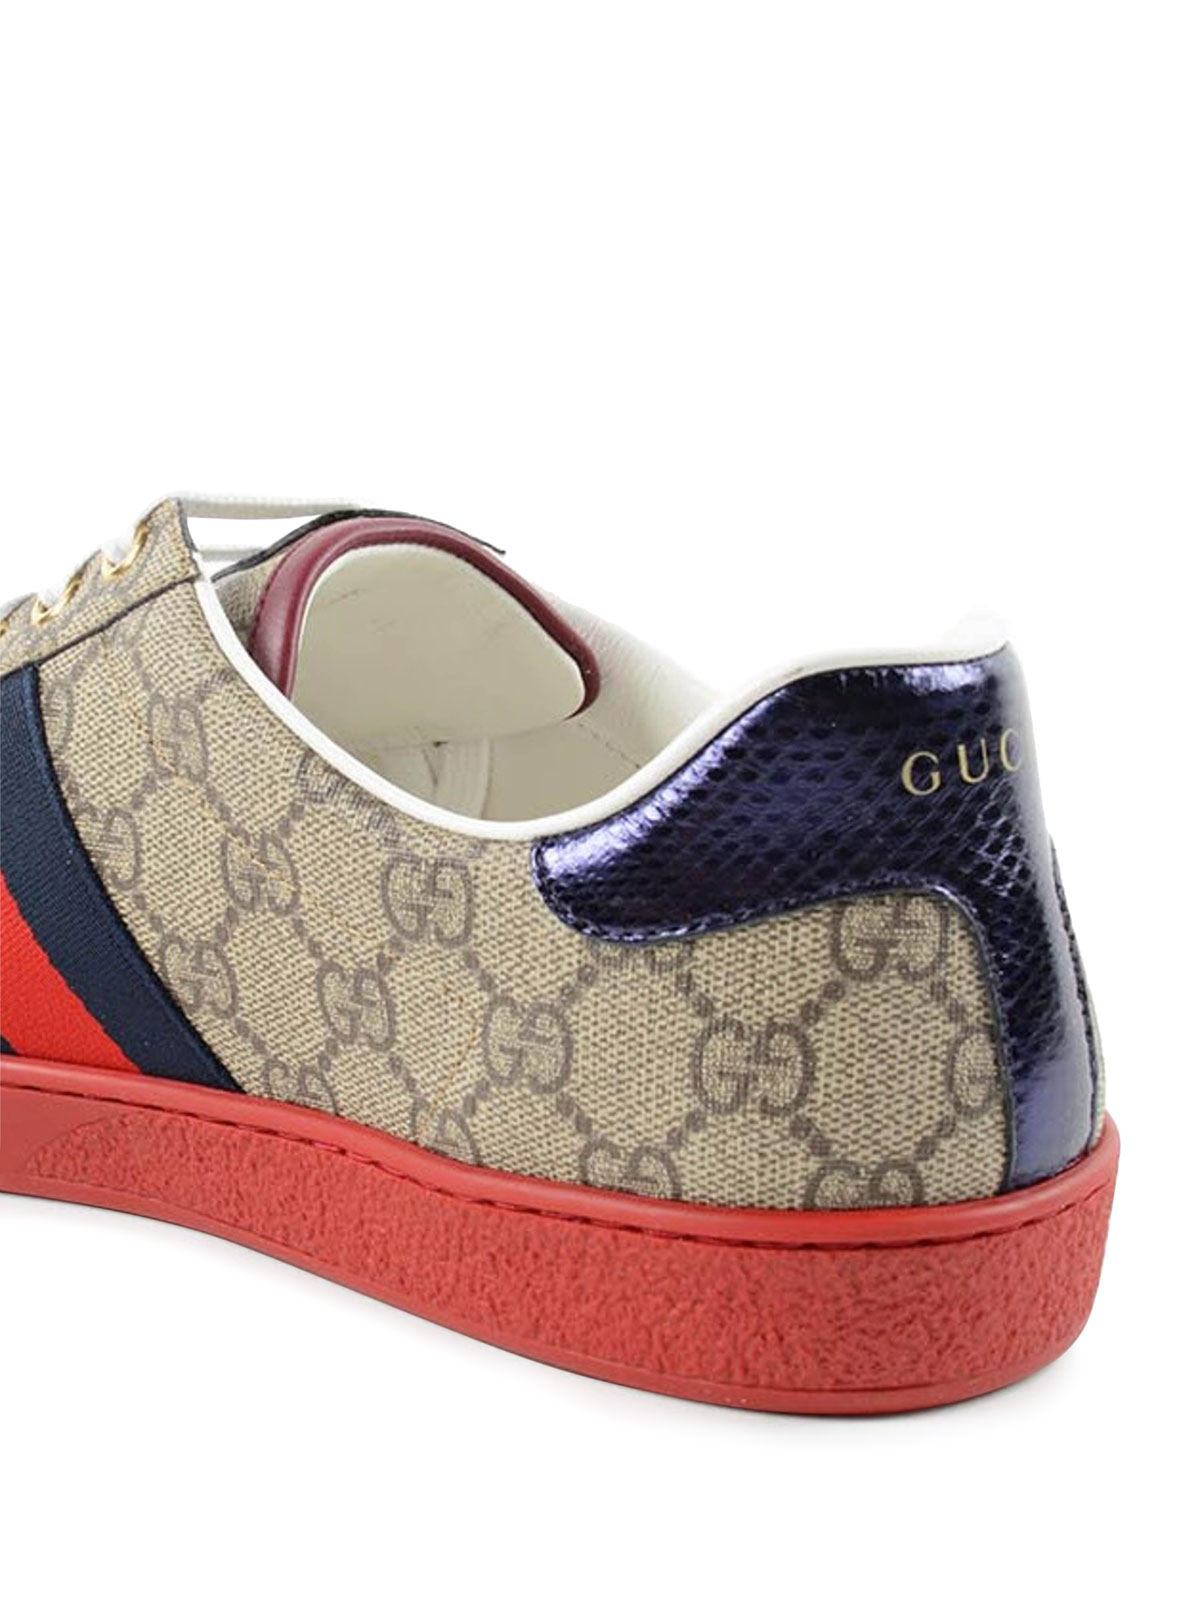 Gucci - GG Supreme sneakers - trainers - 429445/K2LH0 9767 | www.waterandnature.org